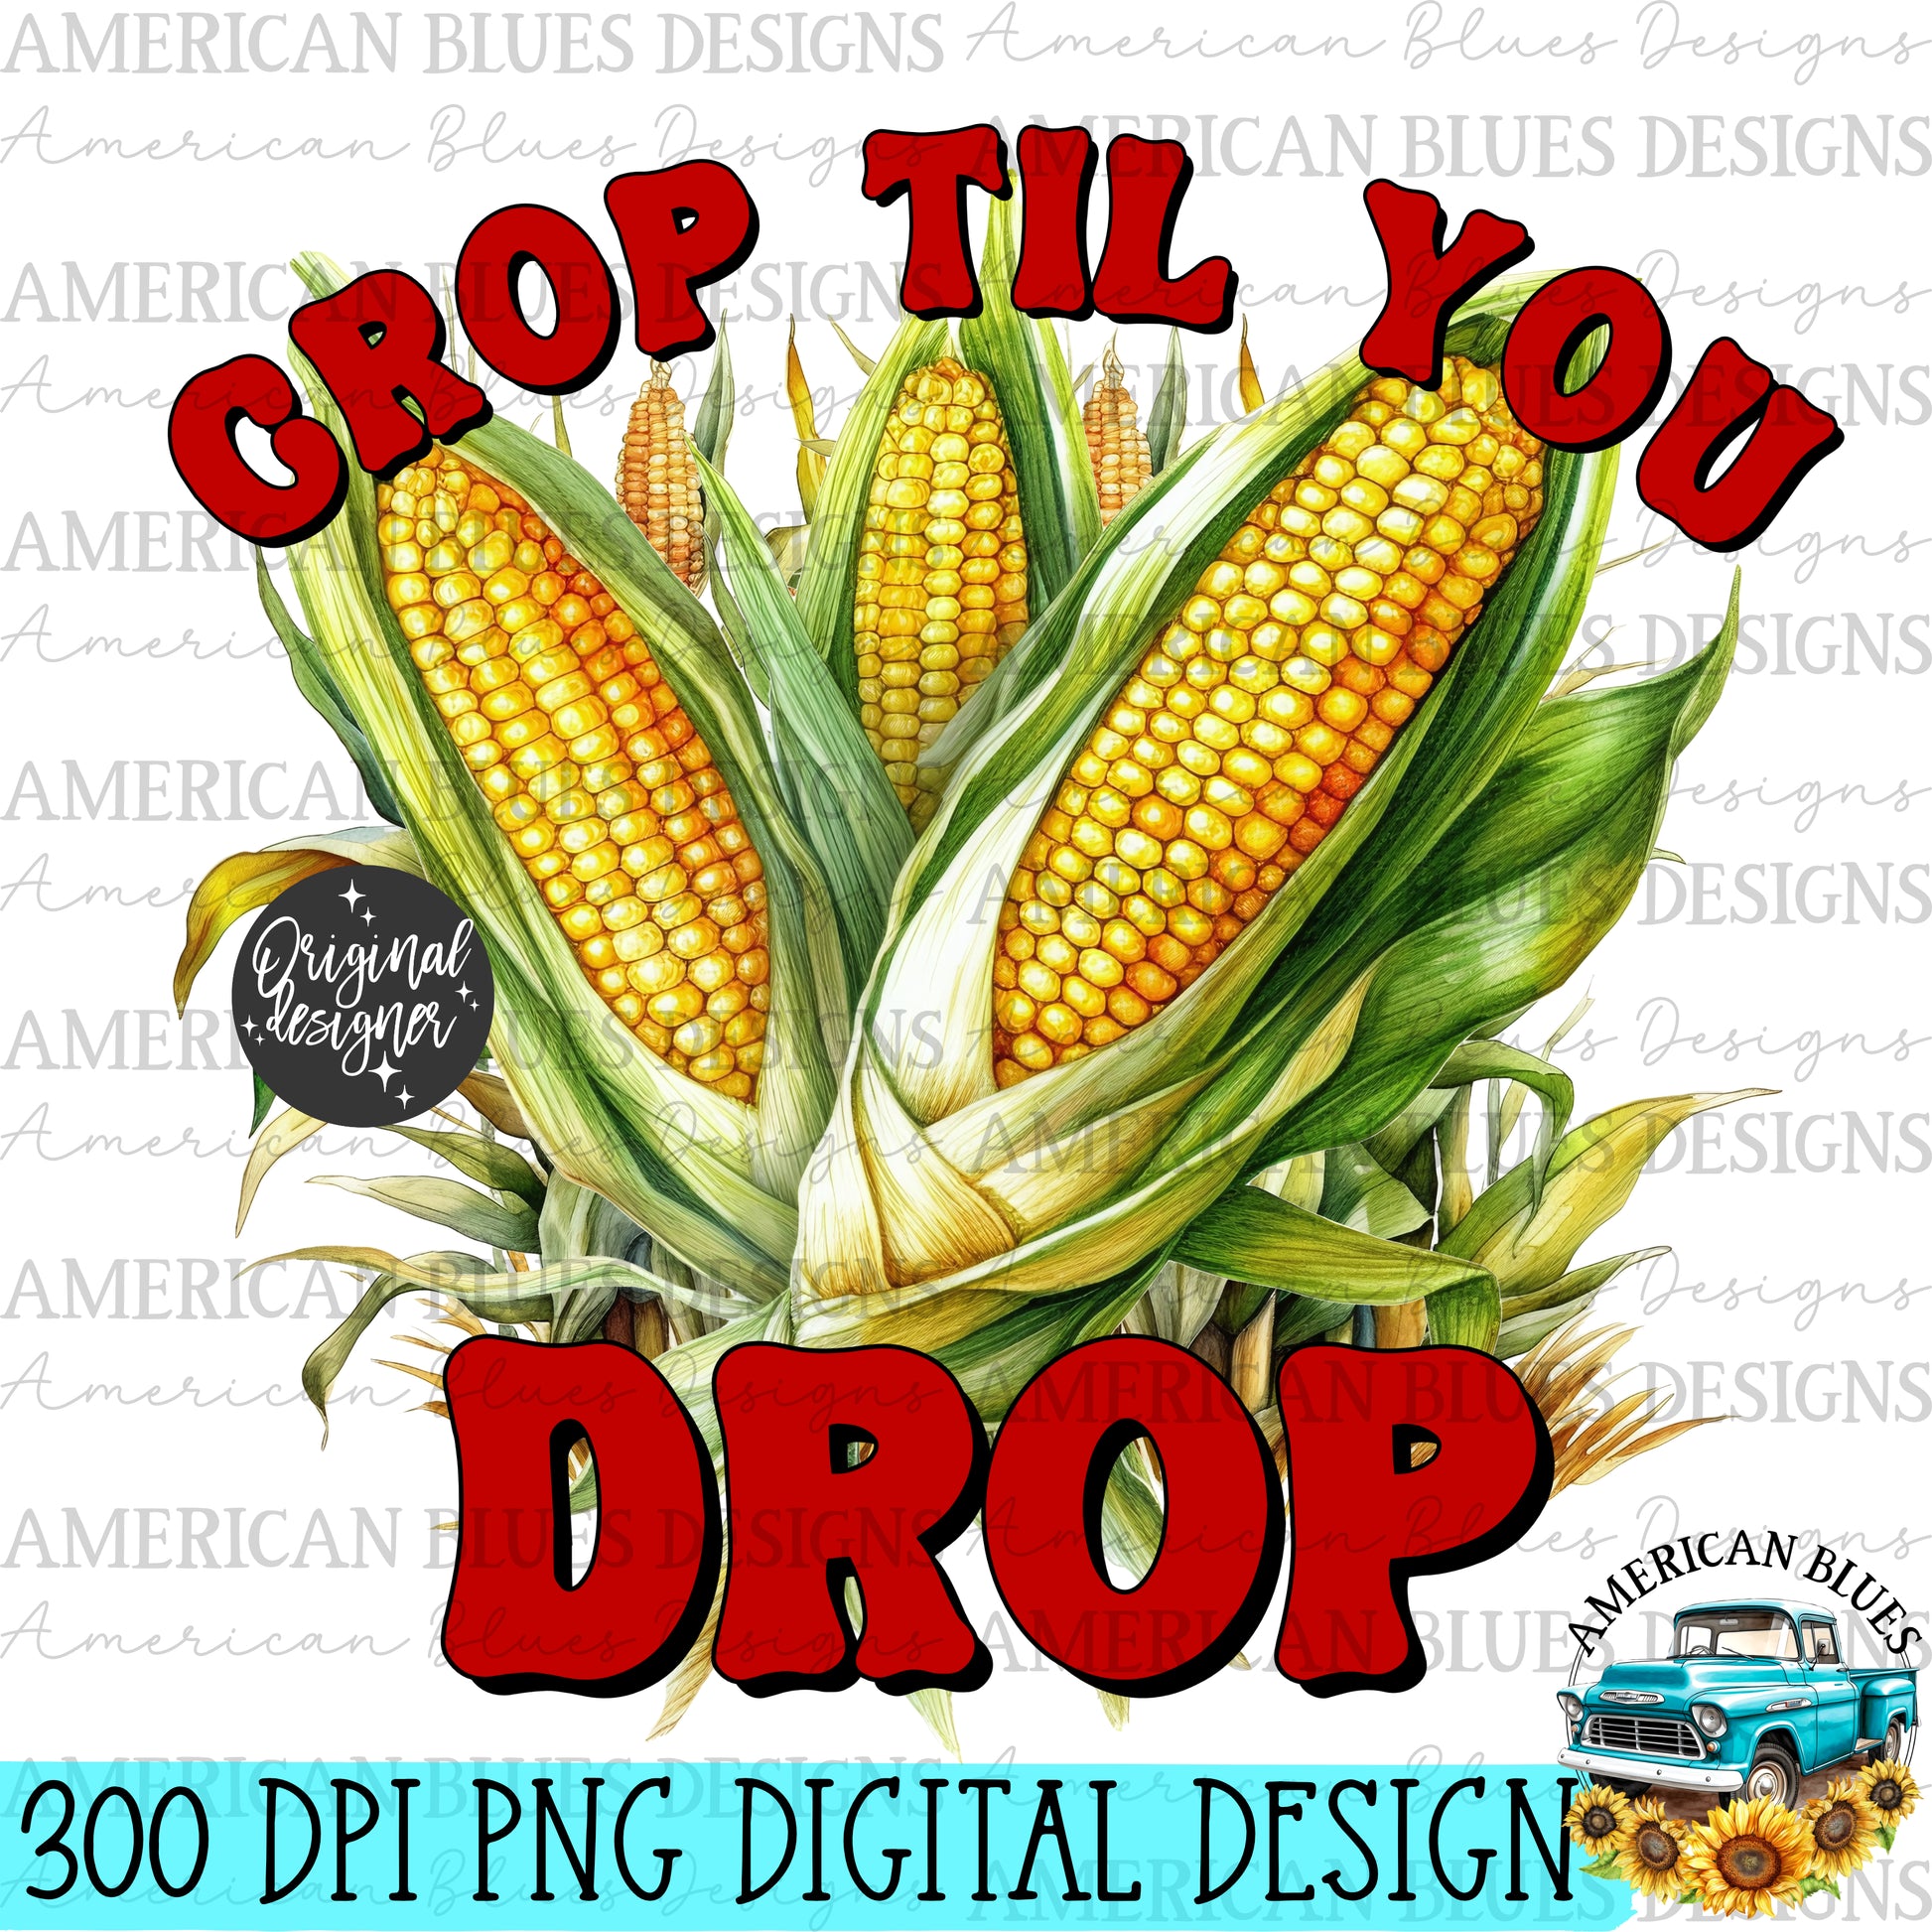 Crop til you drop digital design | American Blues Designs 